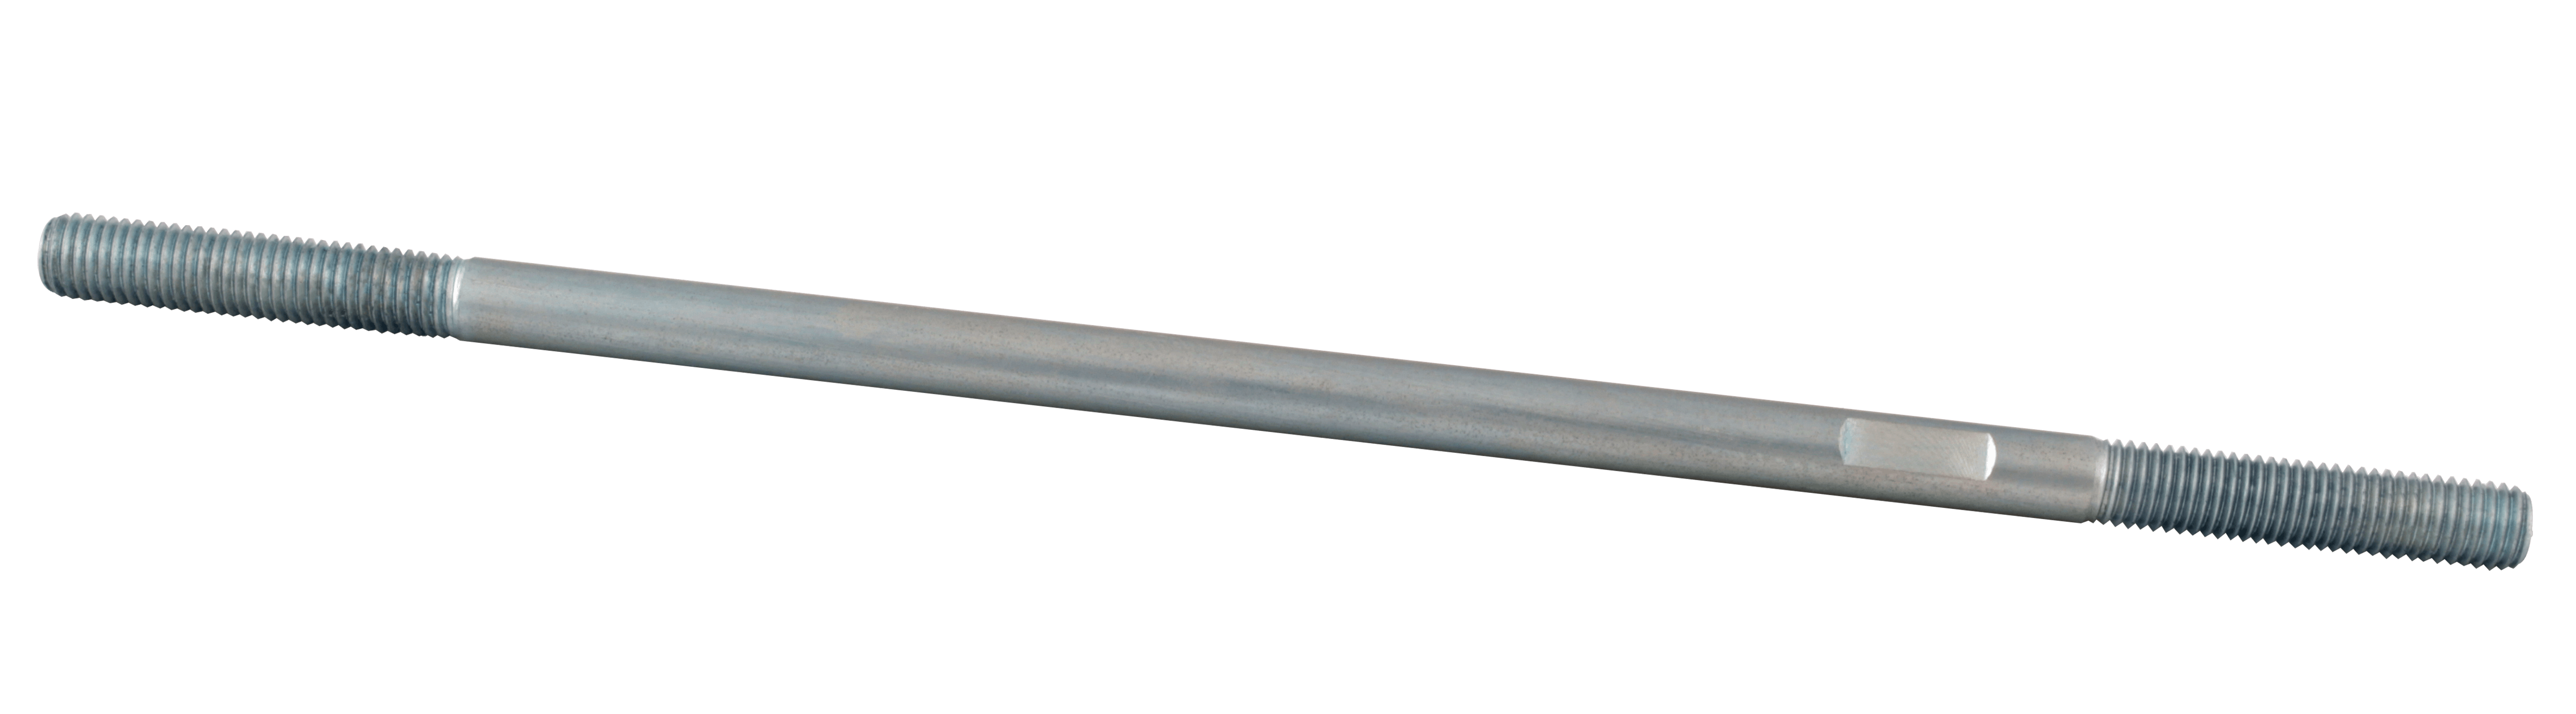 QA1 1698-119 Linkage Rod, Carbon Steel 3/8-24 - 3/8-24 X 20.25 inch Long